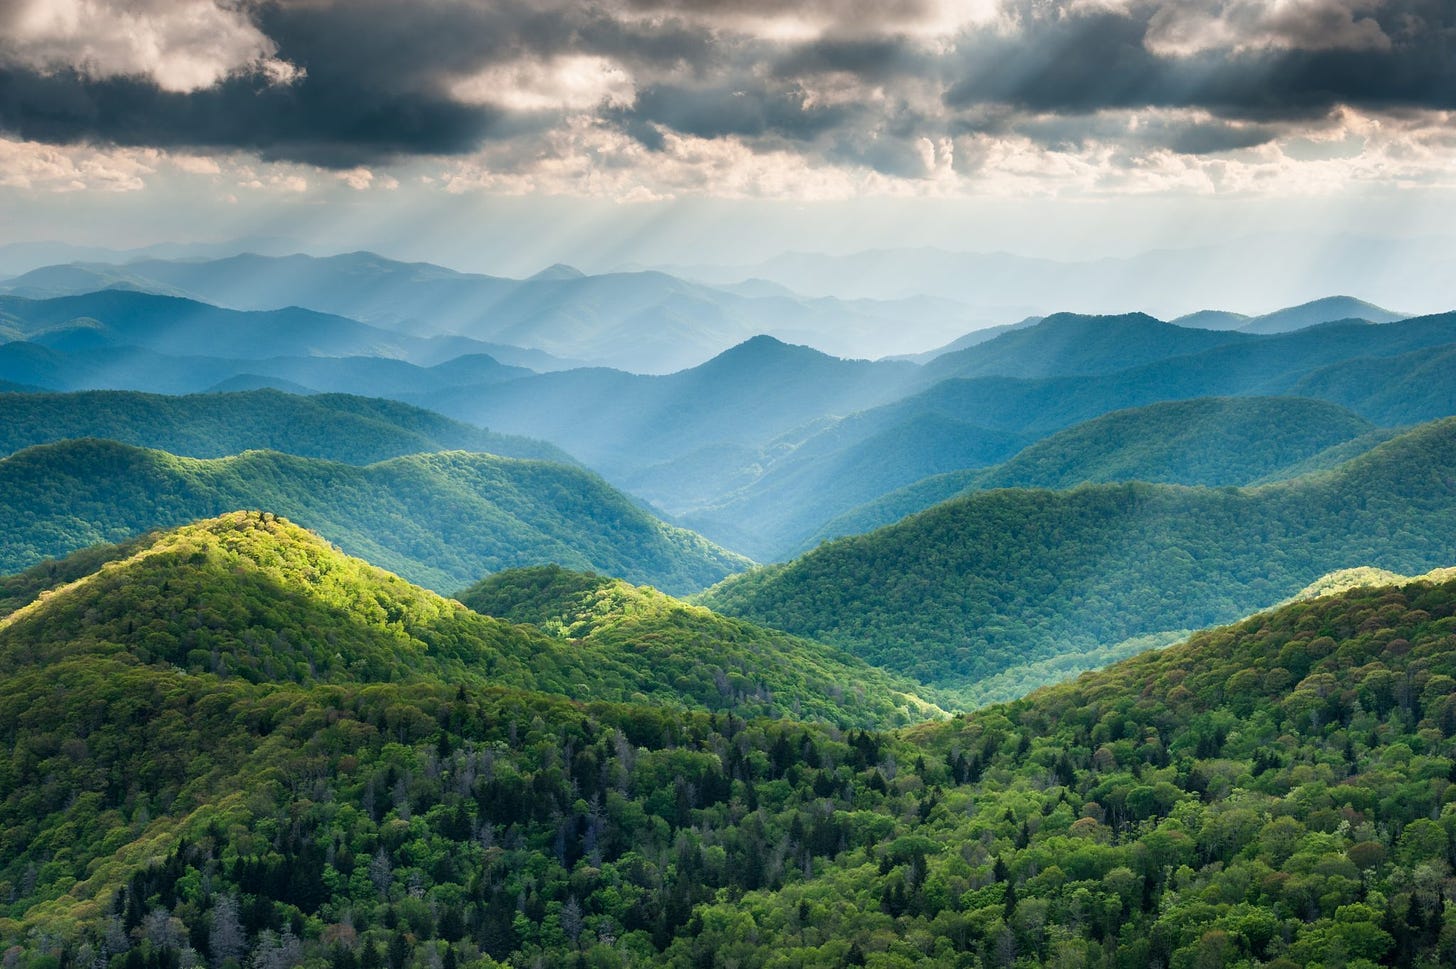 Beautiful photo of the Appalachian Mountains, sun rays breaking through a moody sky.